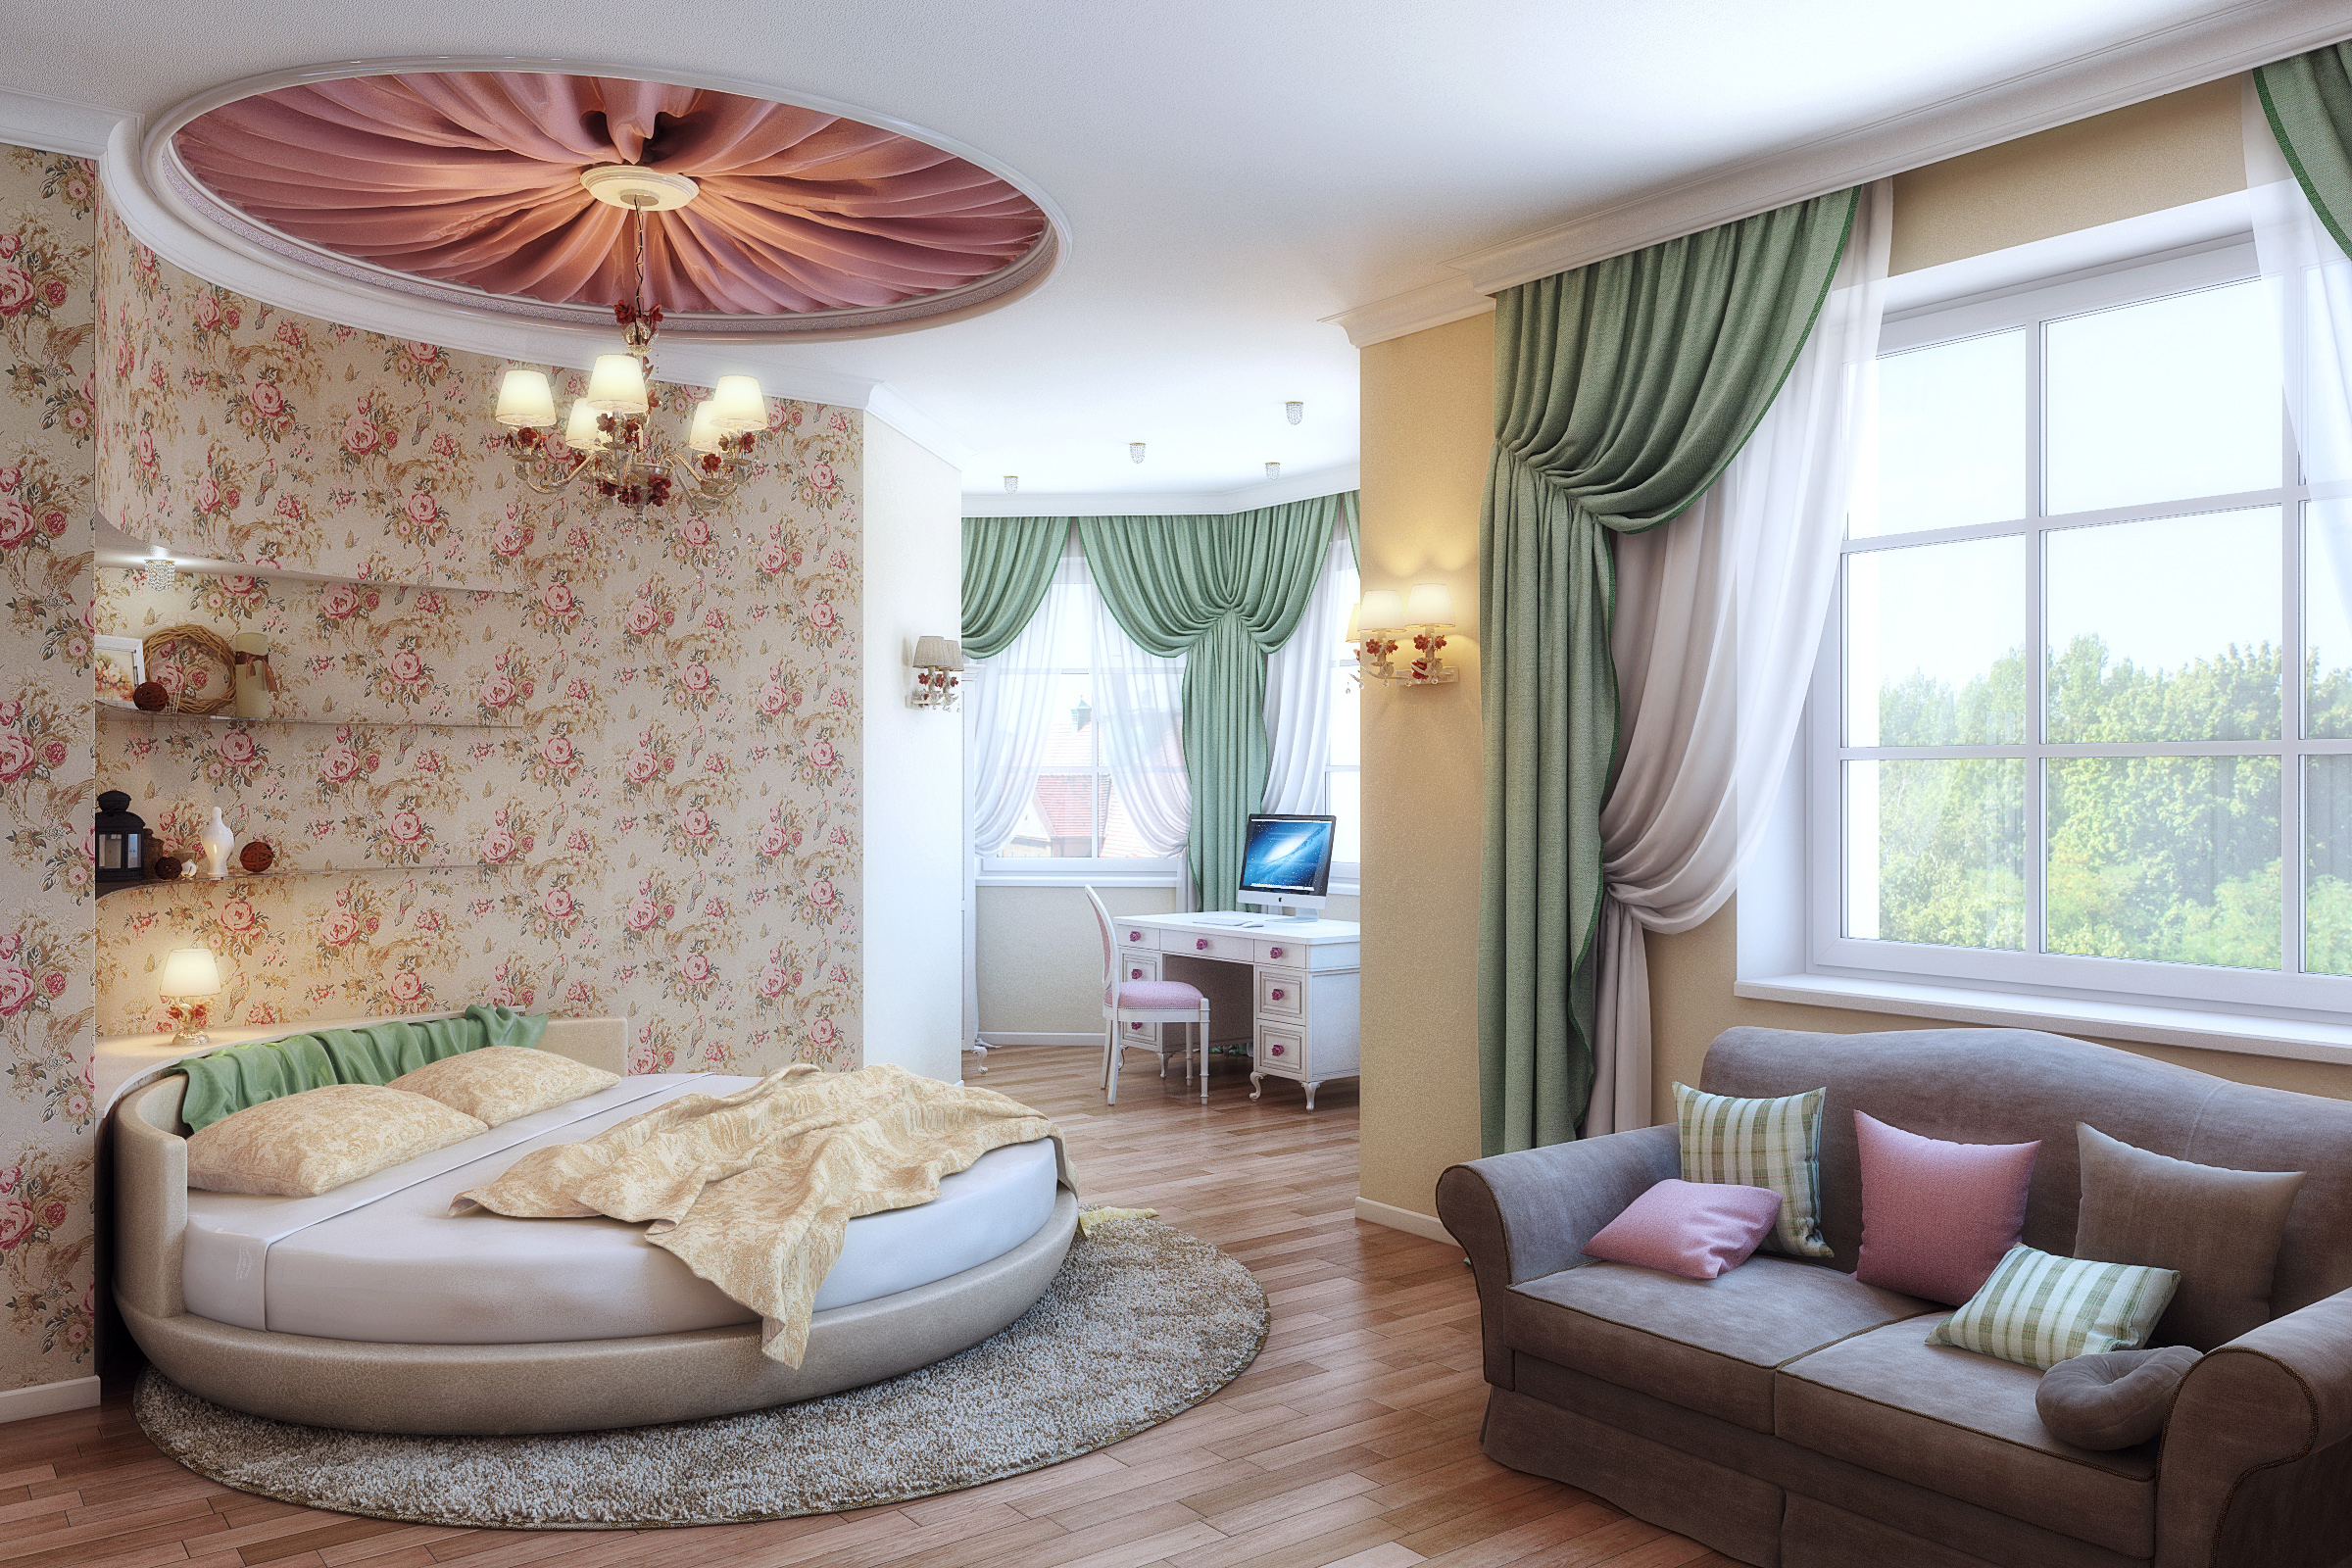 Дизайн комнаты для женщины 40 лет